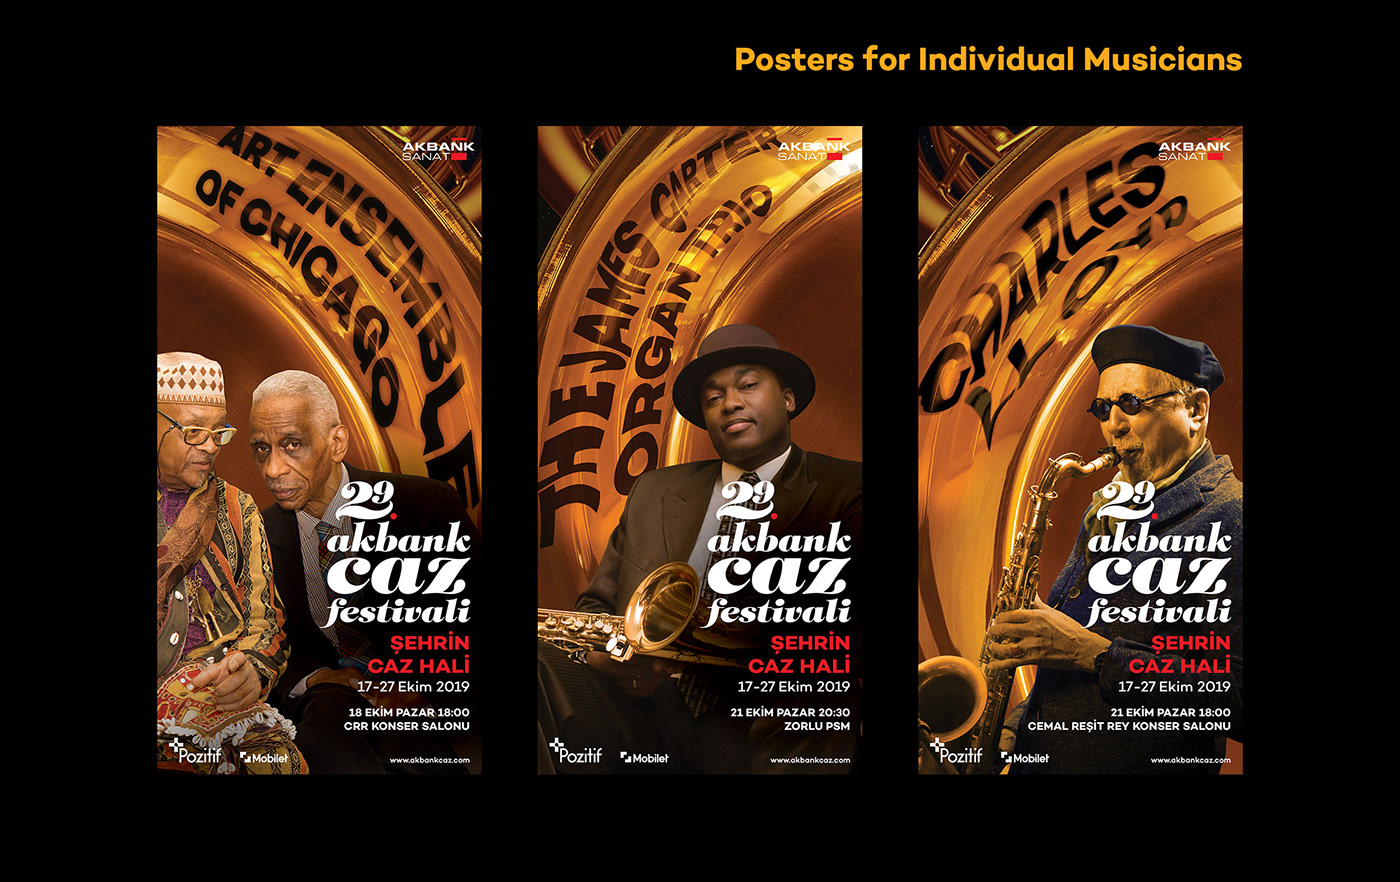 jazz jazz festival Film   poster